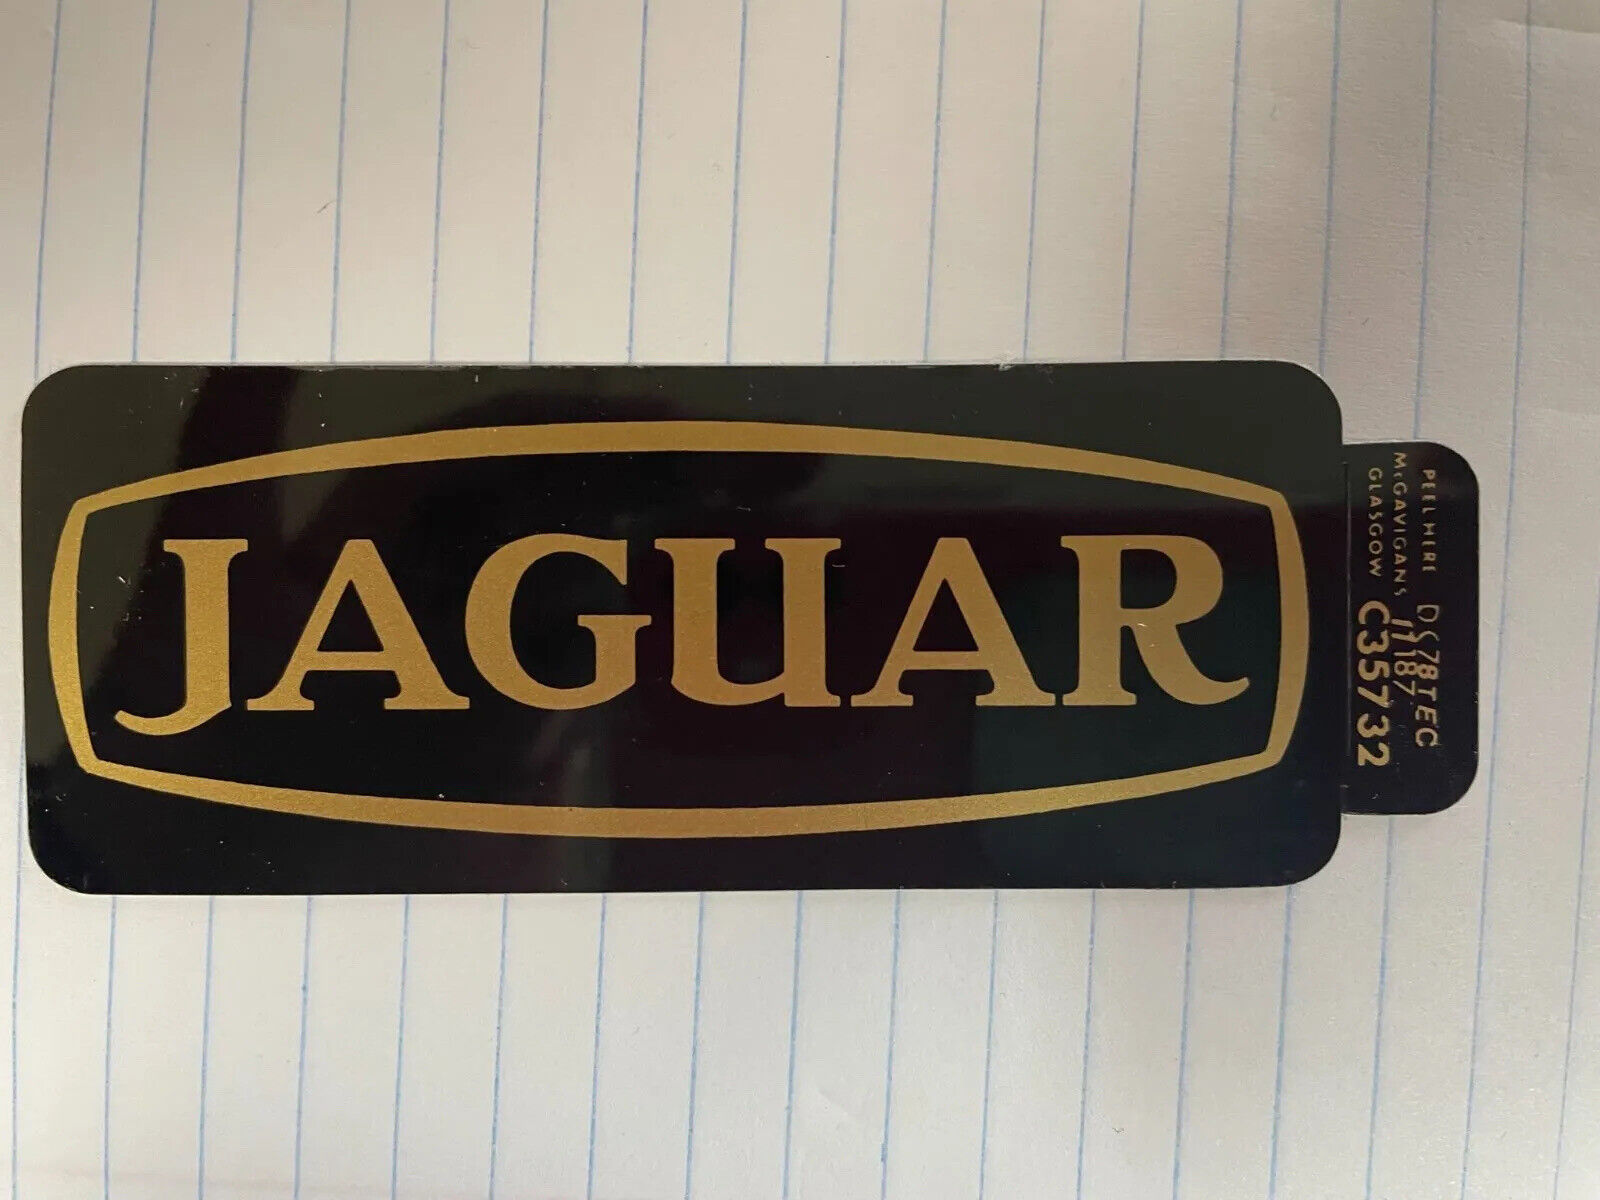 Jaguar E-Type decal cam covers, badge Black gold C35732 made in UK